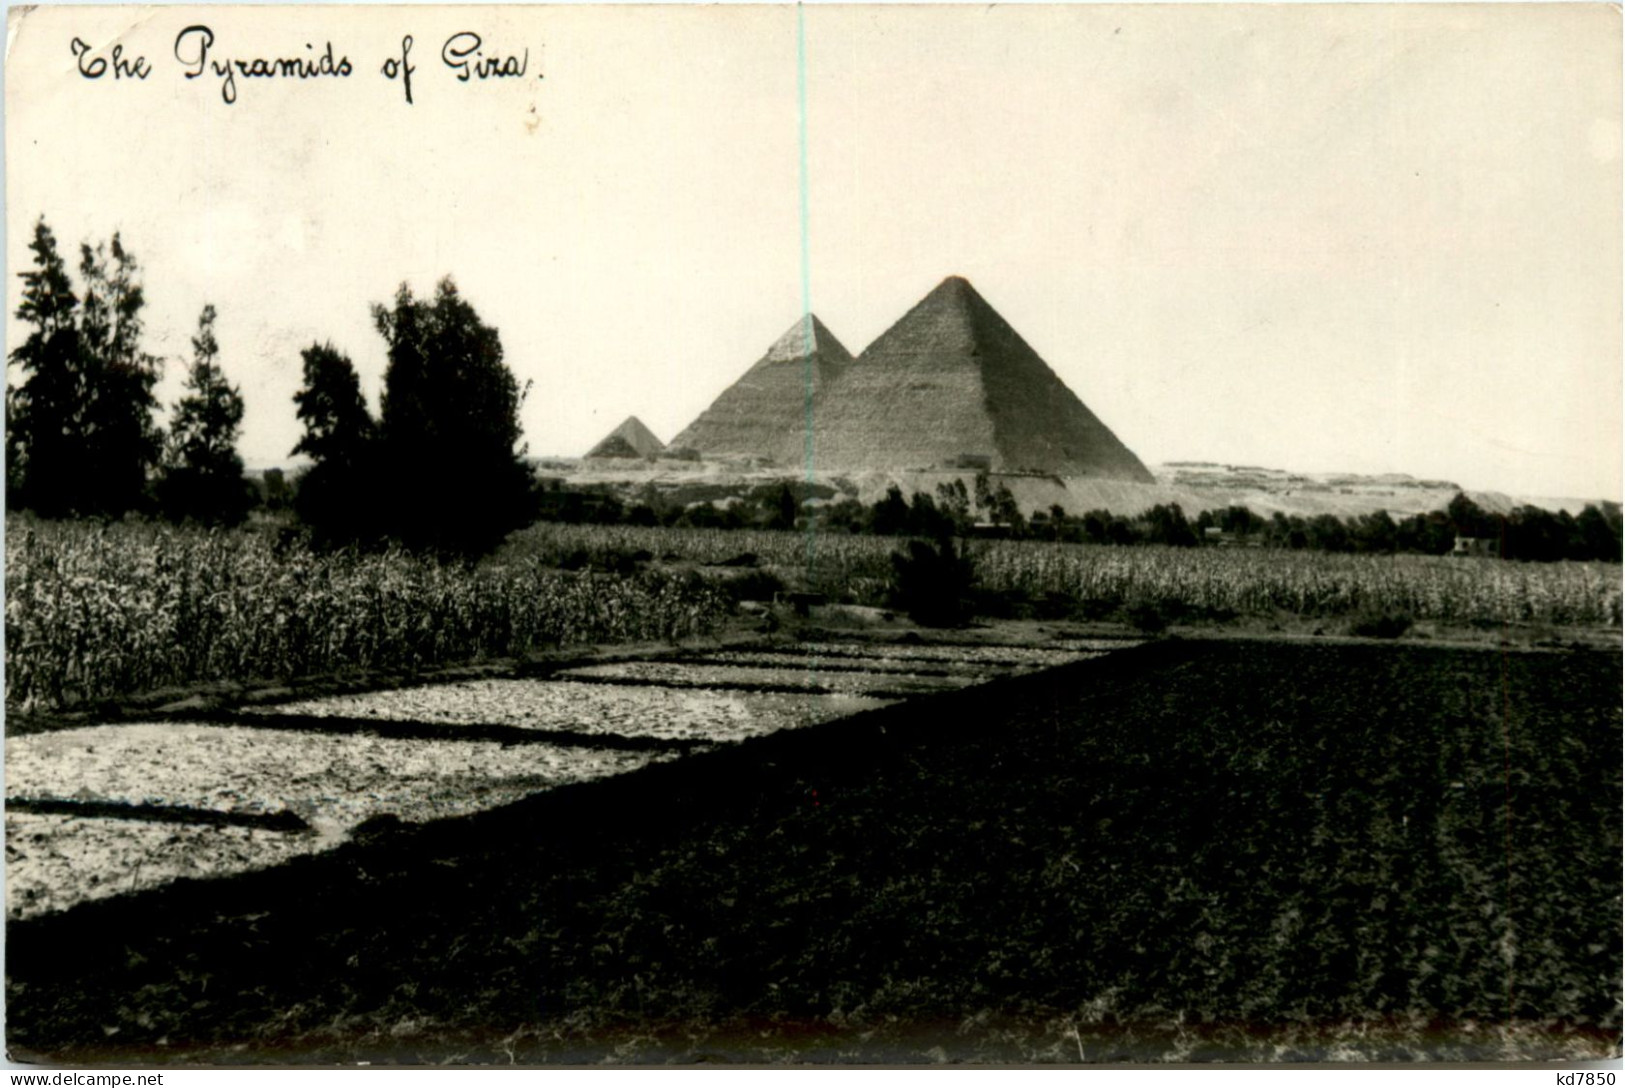 The Pyramids Of Giza - Pyramids